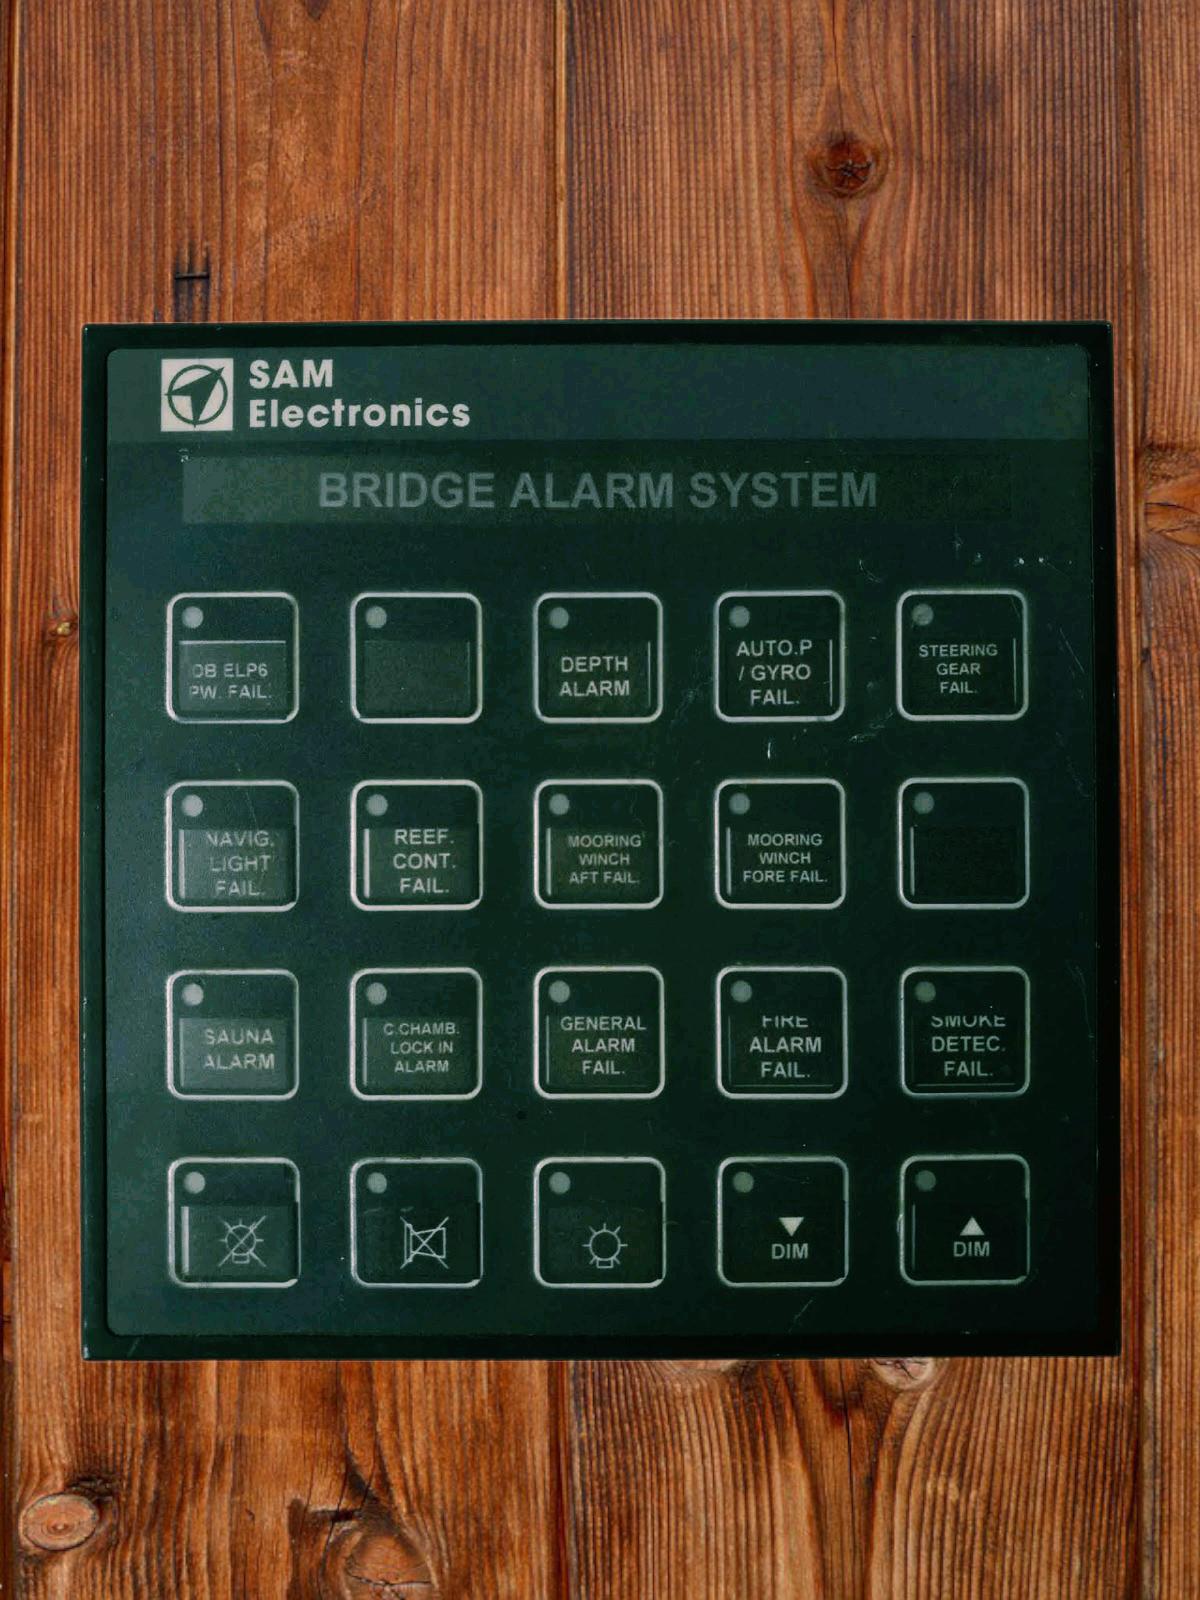 SAM Electronics Bridge Alarm System STN ATLAS C6115 BAP 401